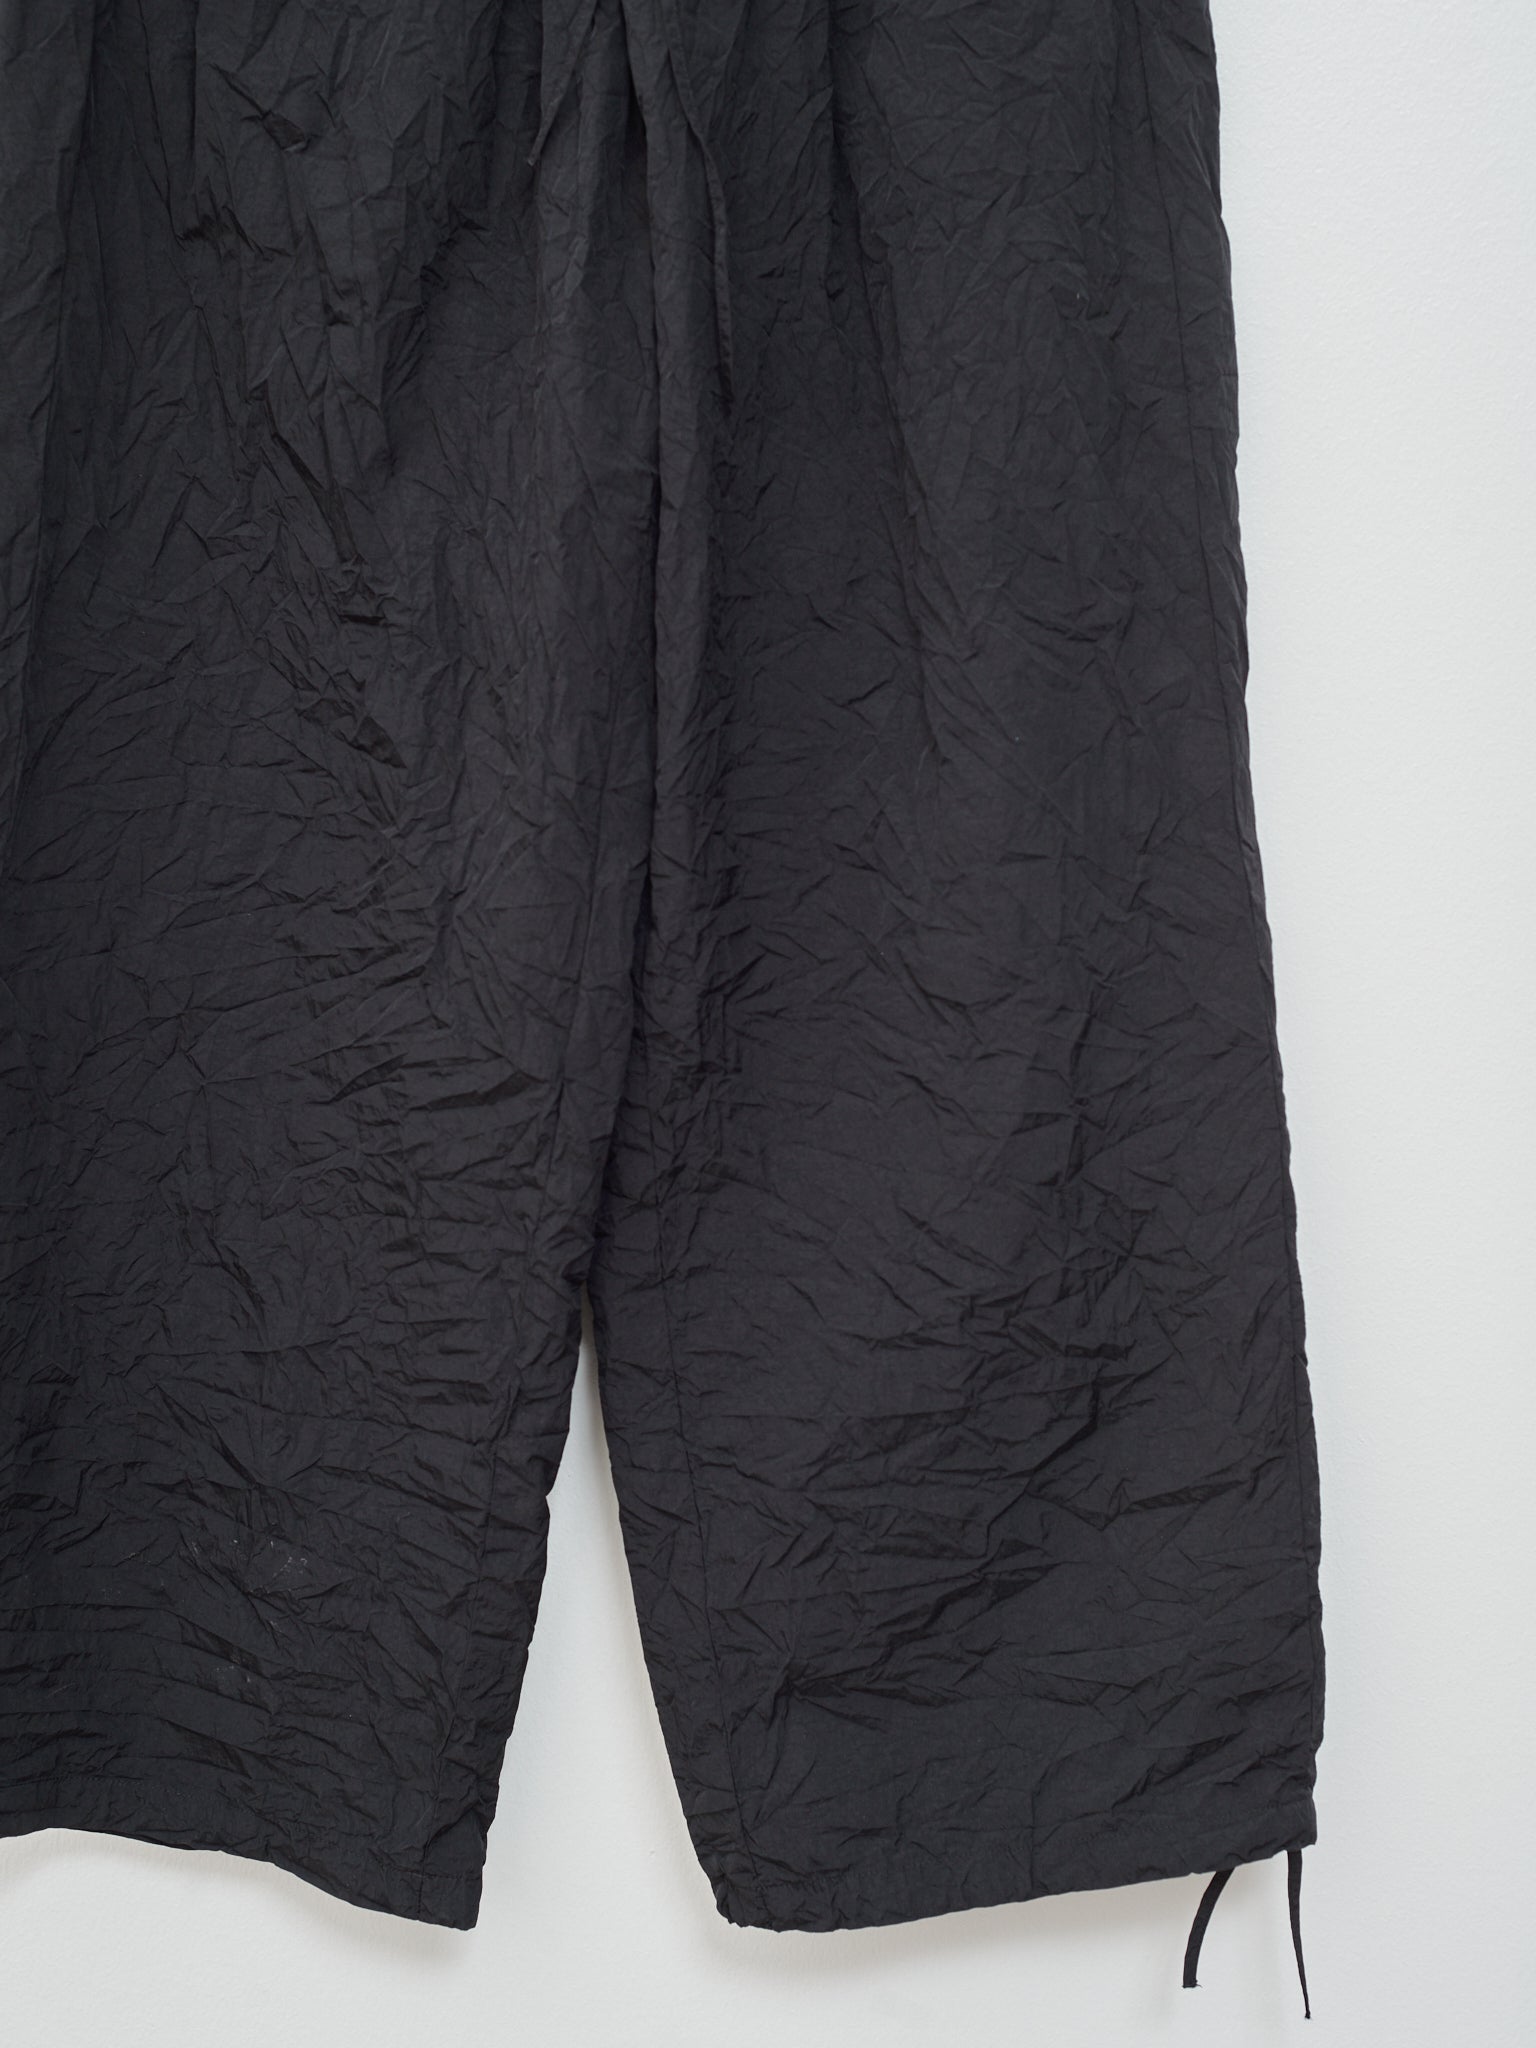 Namu Shop - Aton Catch Washer Nylon Over Pants - Black